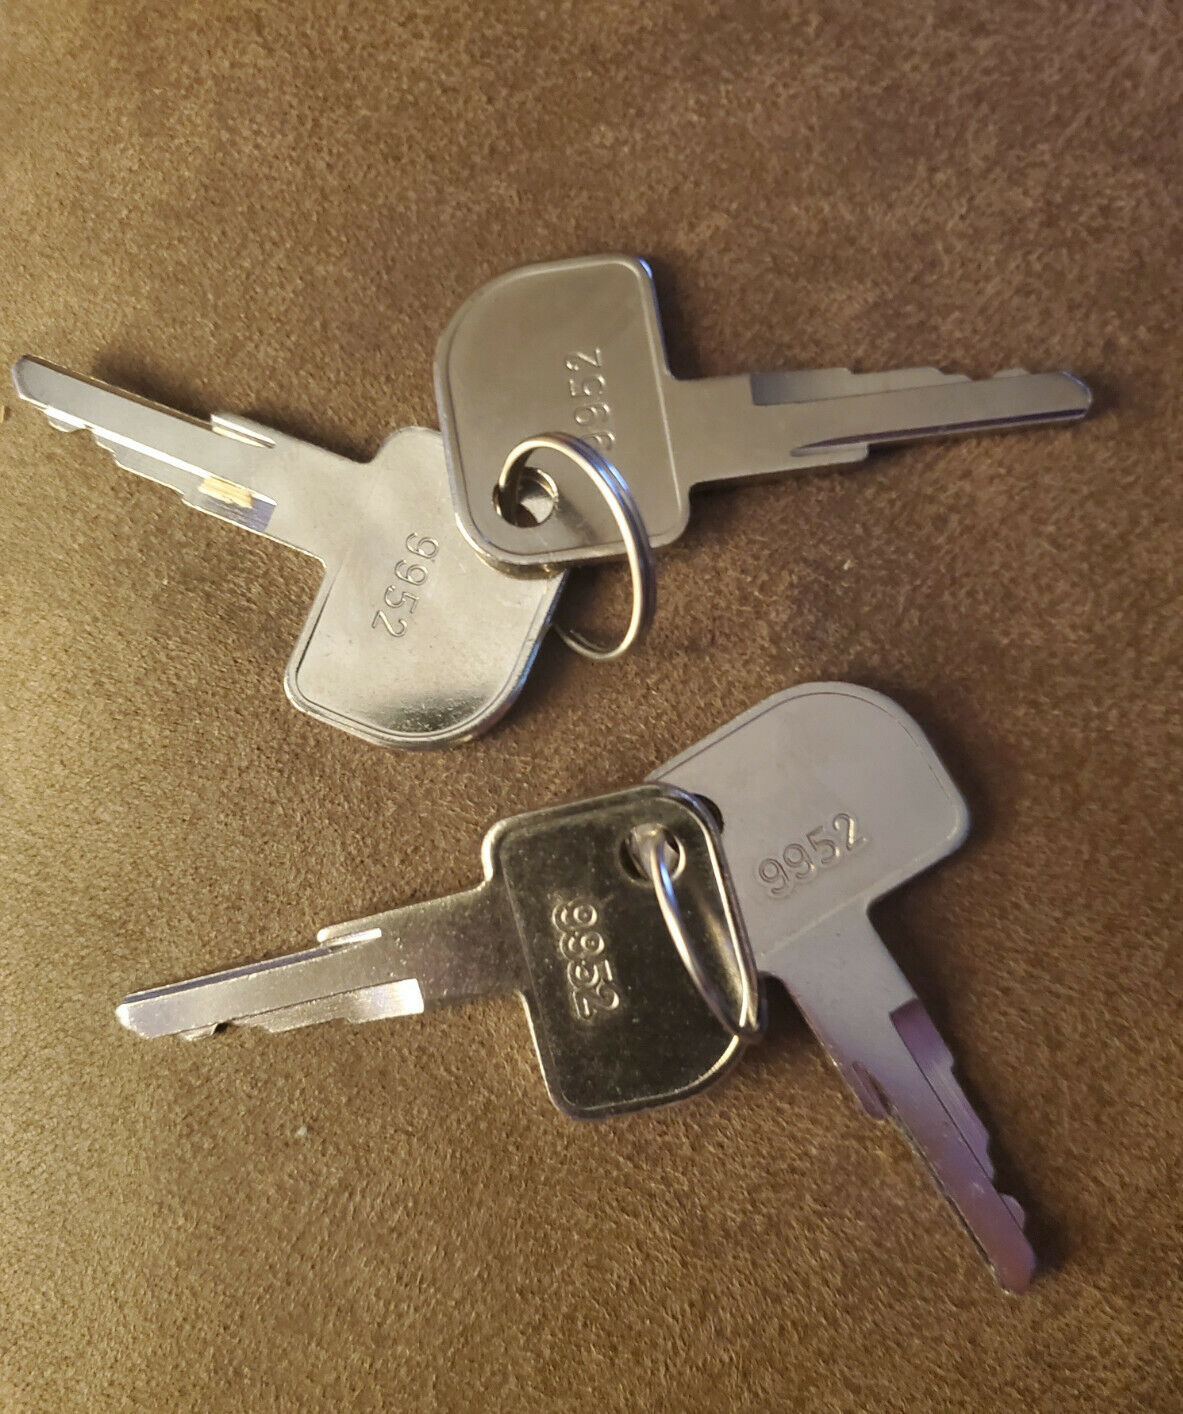 New 2 Sets of 2 (4) keys total OEM 9952 IBM Keys for Cash Drawers Displays Locks